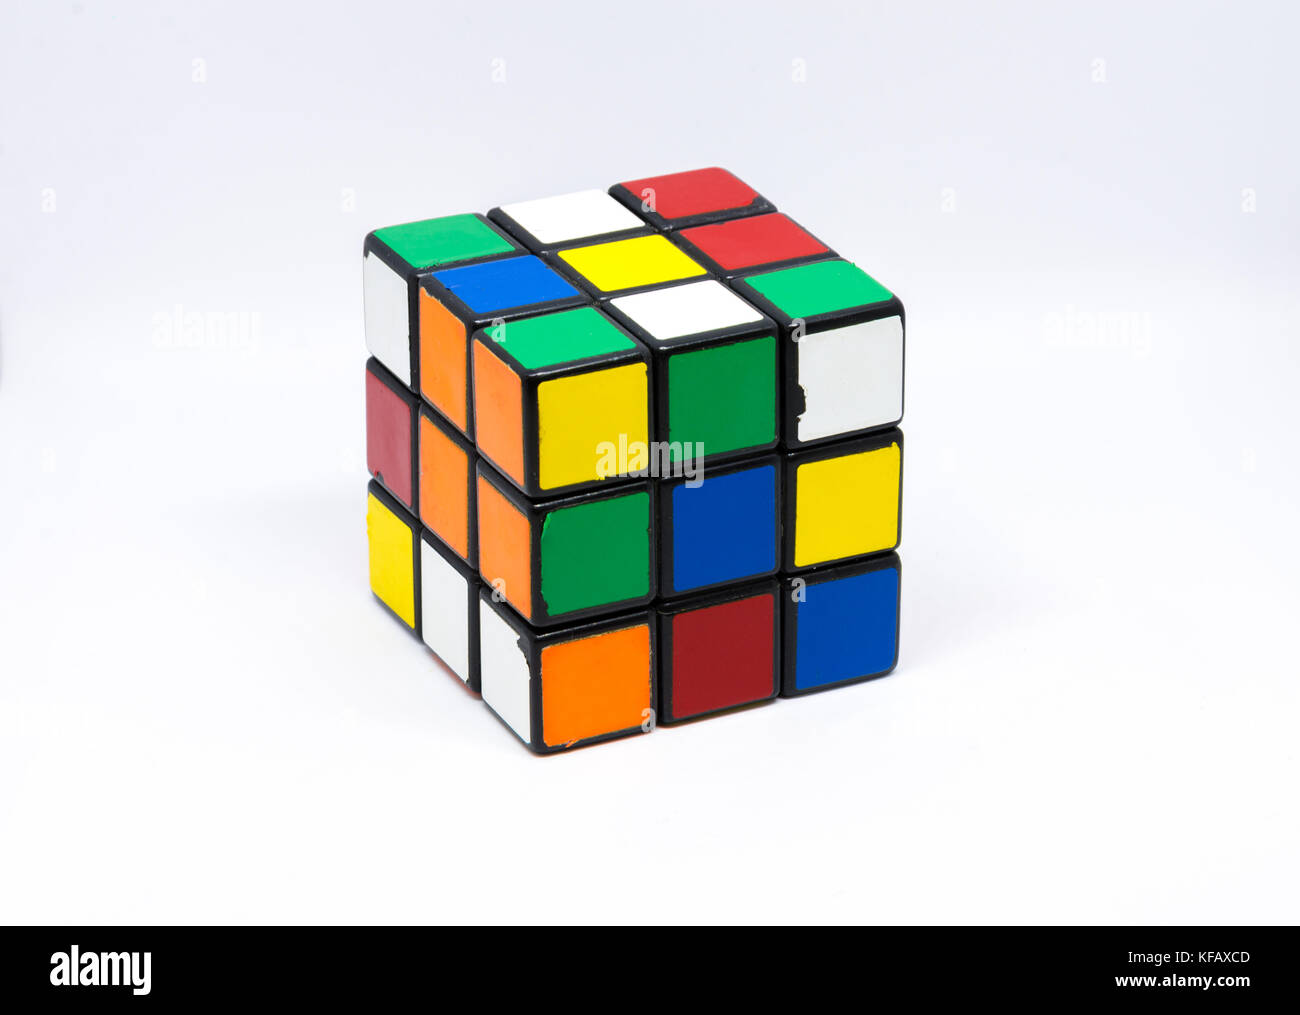 Rubiks Cube 3x3 - Moore Wilson's